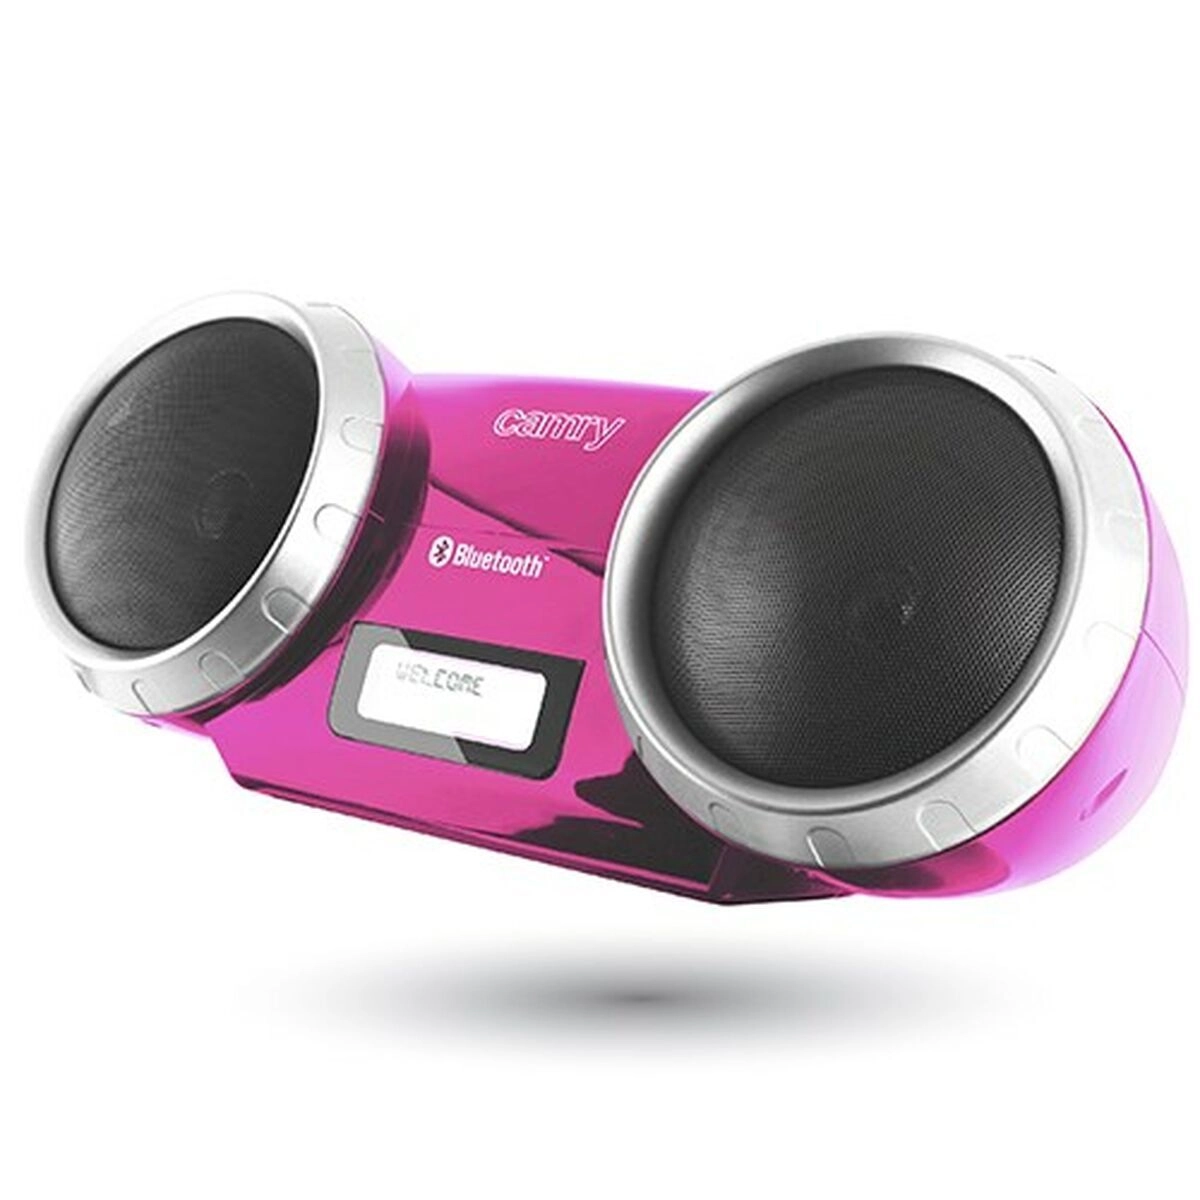 Portable Bluetooth Speakers Adler CR 1139 p Pink